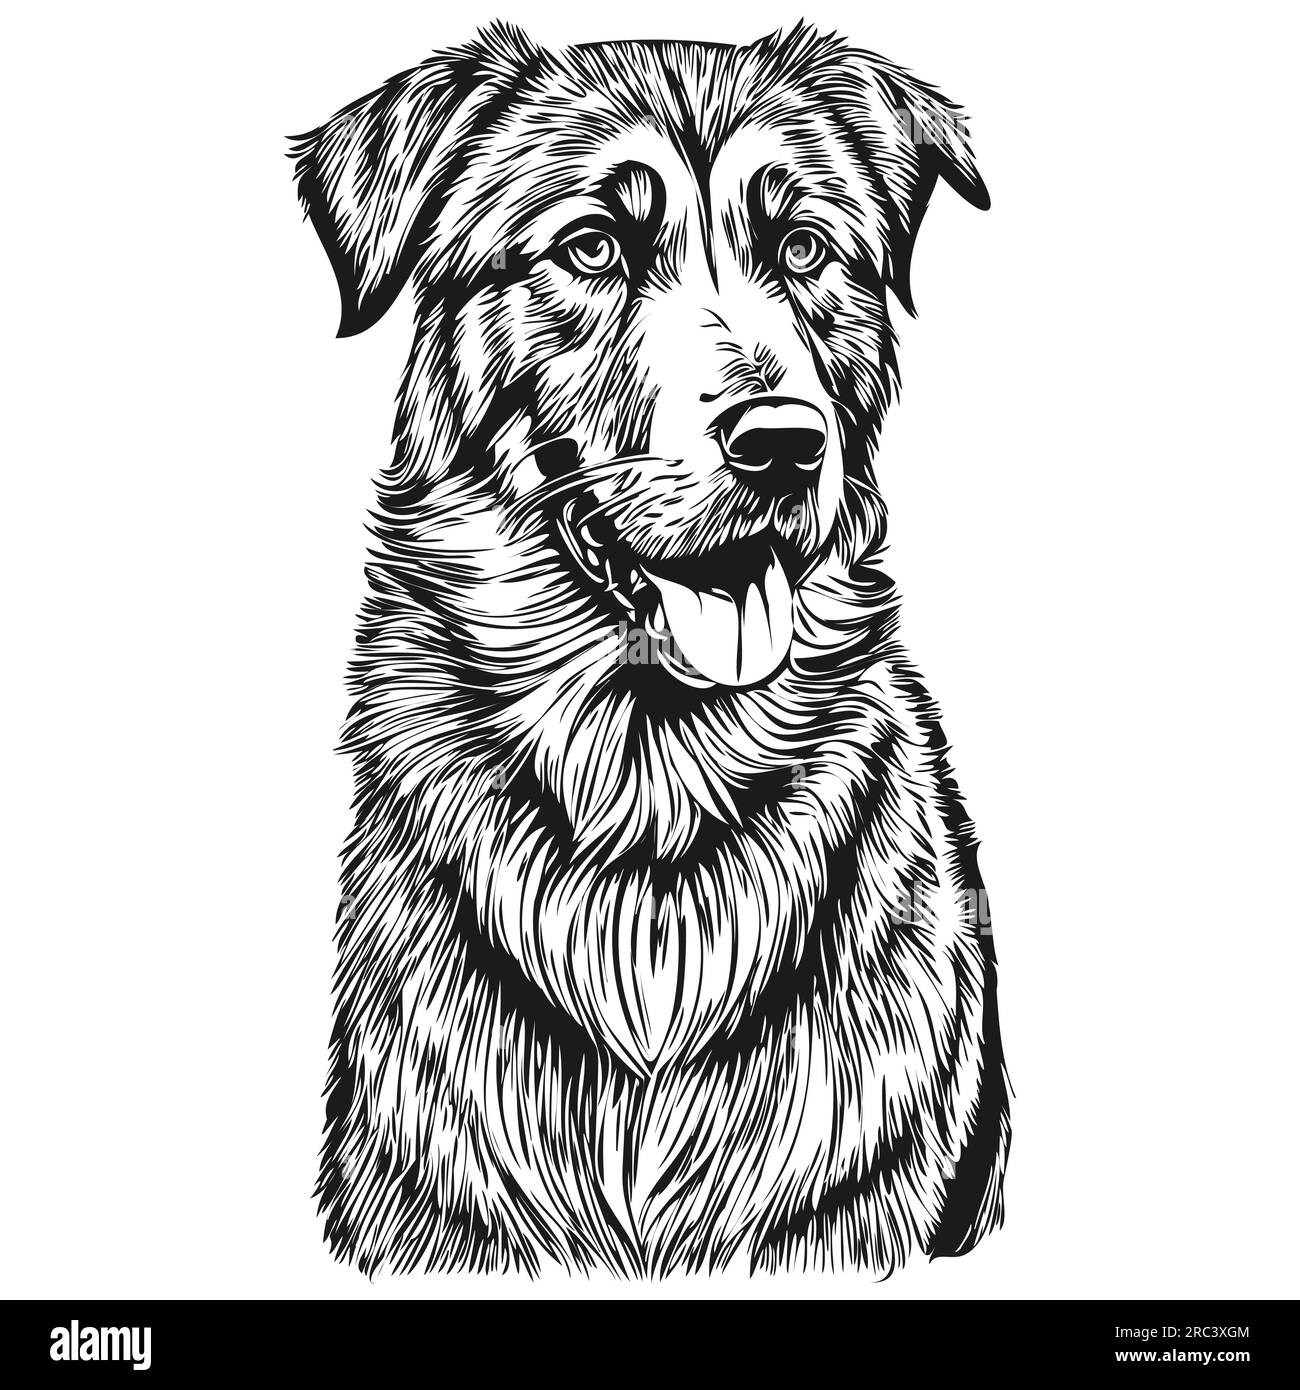 Anatolian Shepherd dog pet sketch illustration, black and white engraving vector Stock Vector